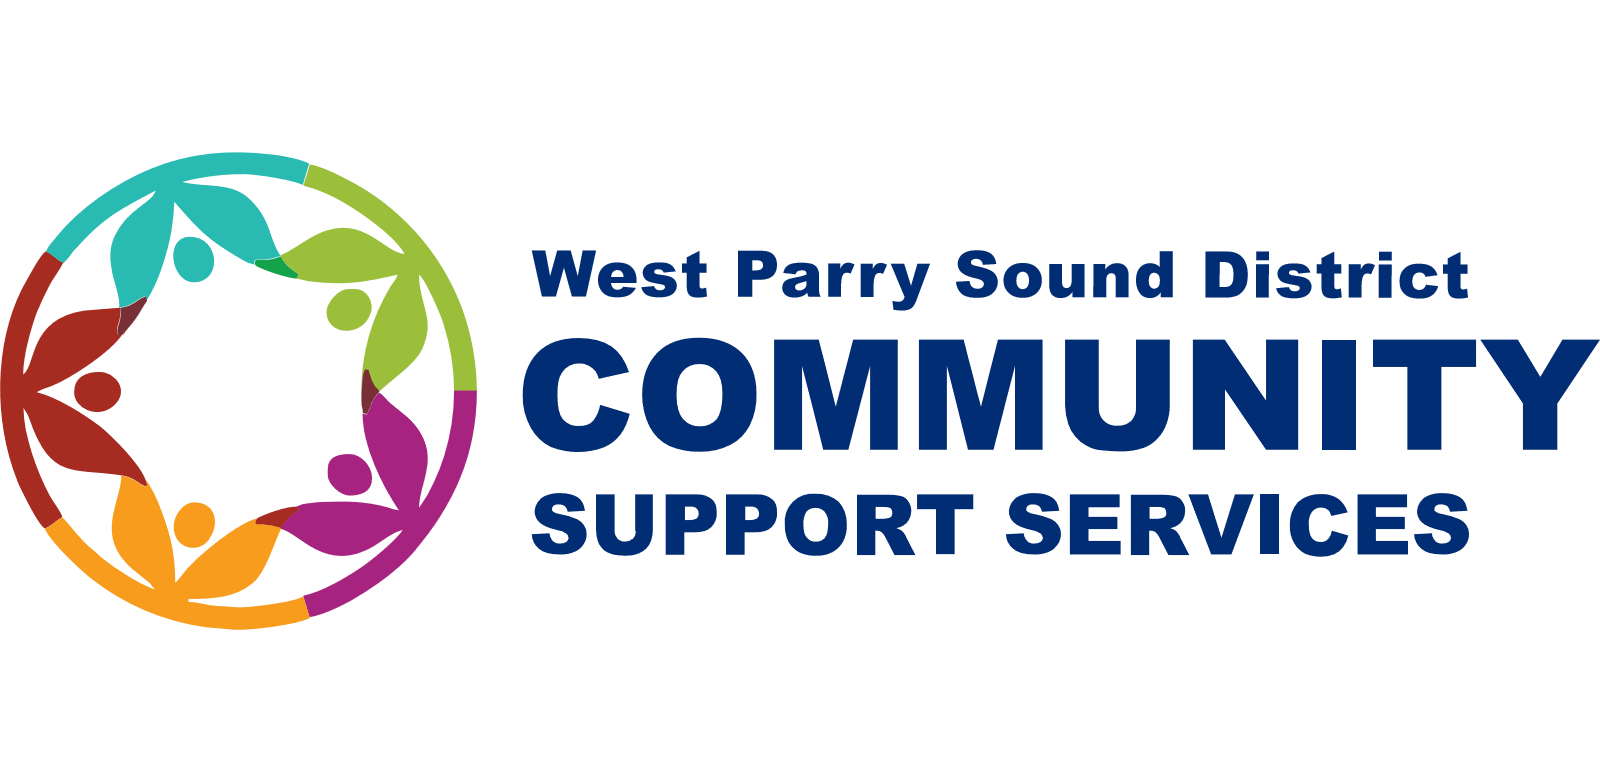 West Parry Sound Support Services logo